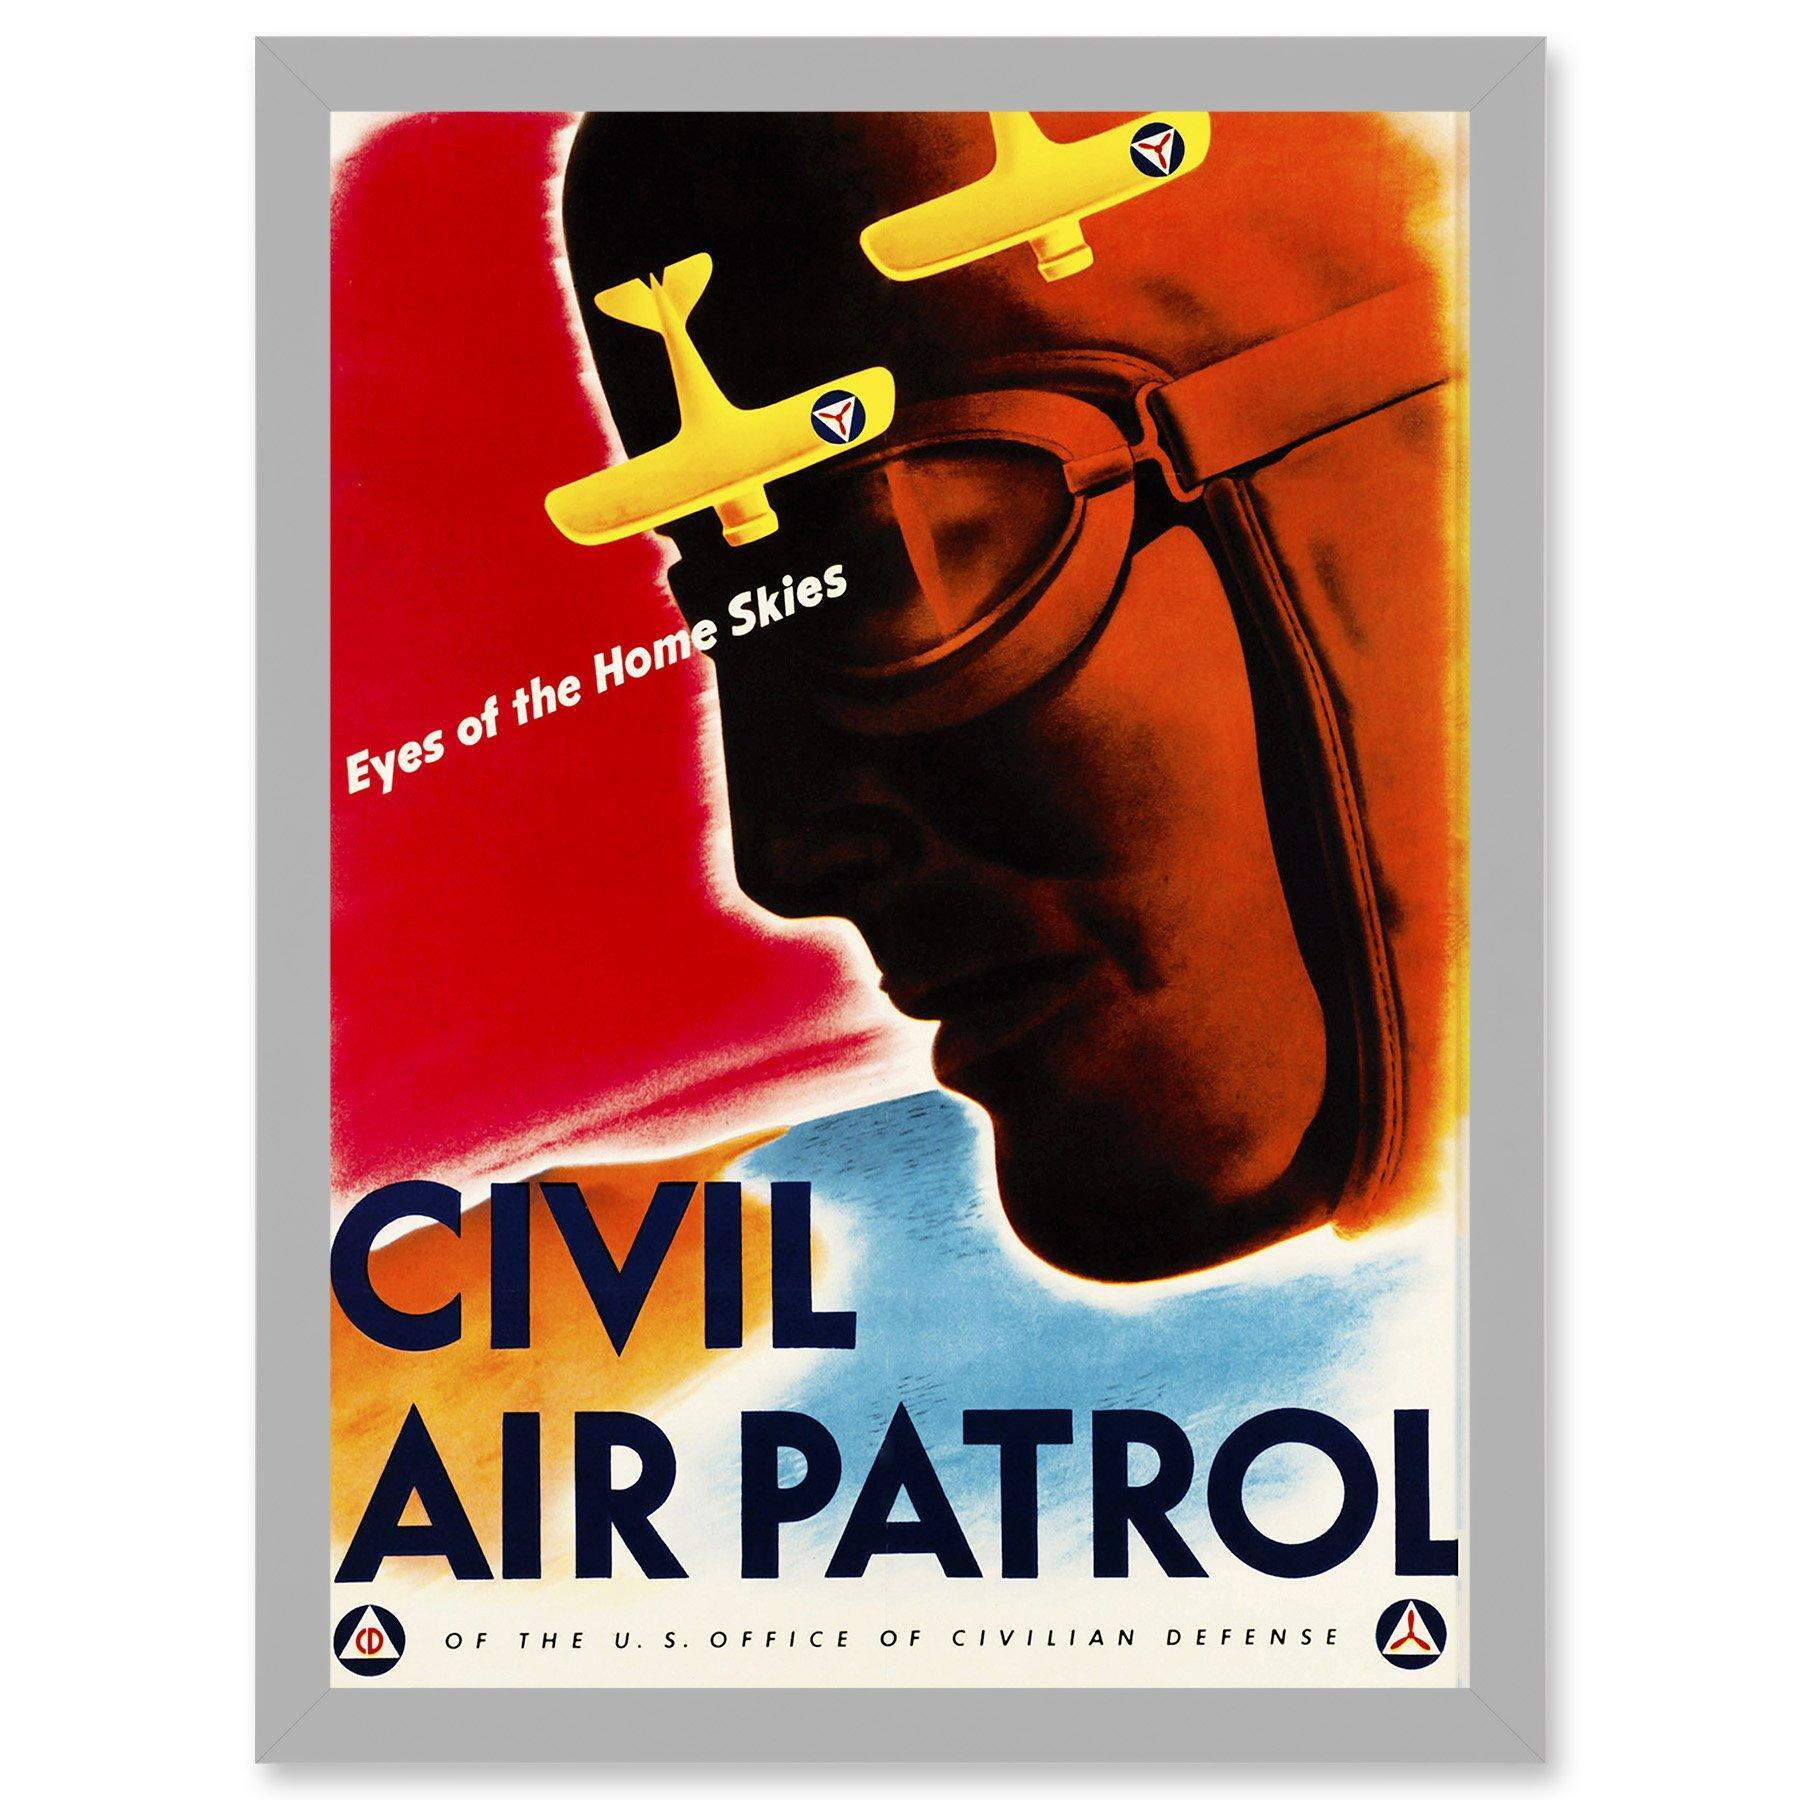 Political Military Civil Air Patrol Pilot USA Eyes Of The Home Skies A4 Artwork Framed Wall Art Print - image 1